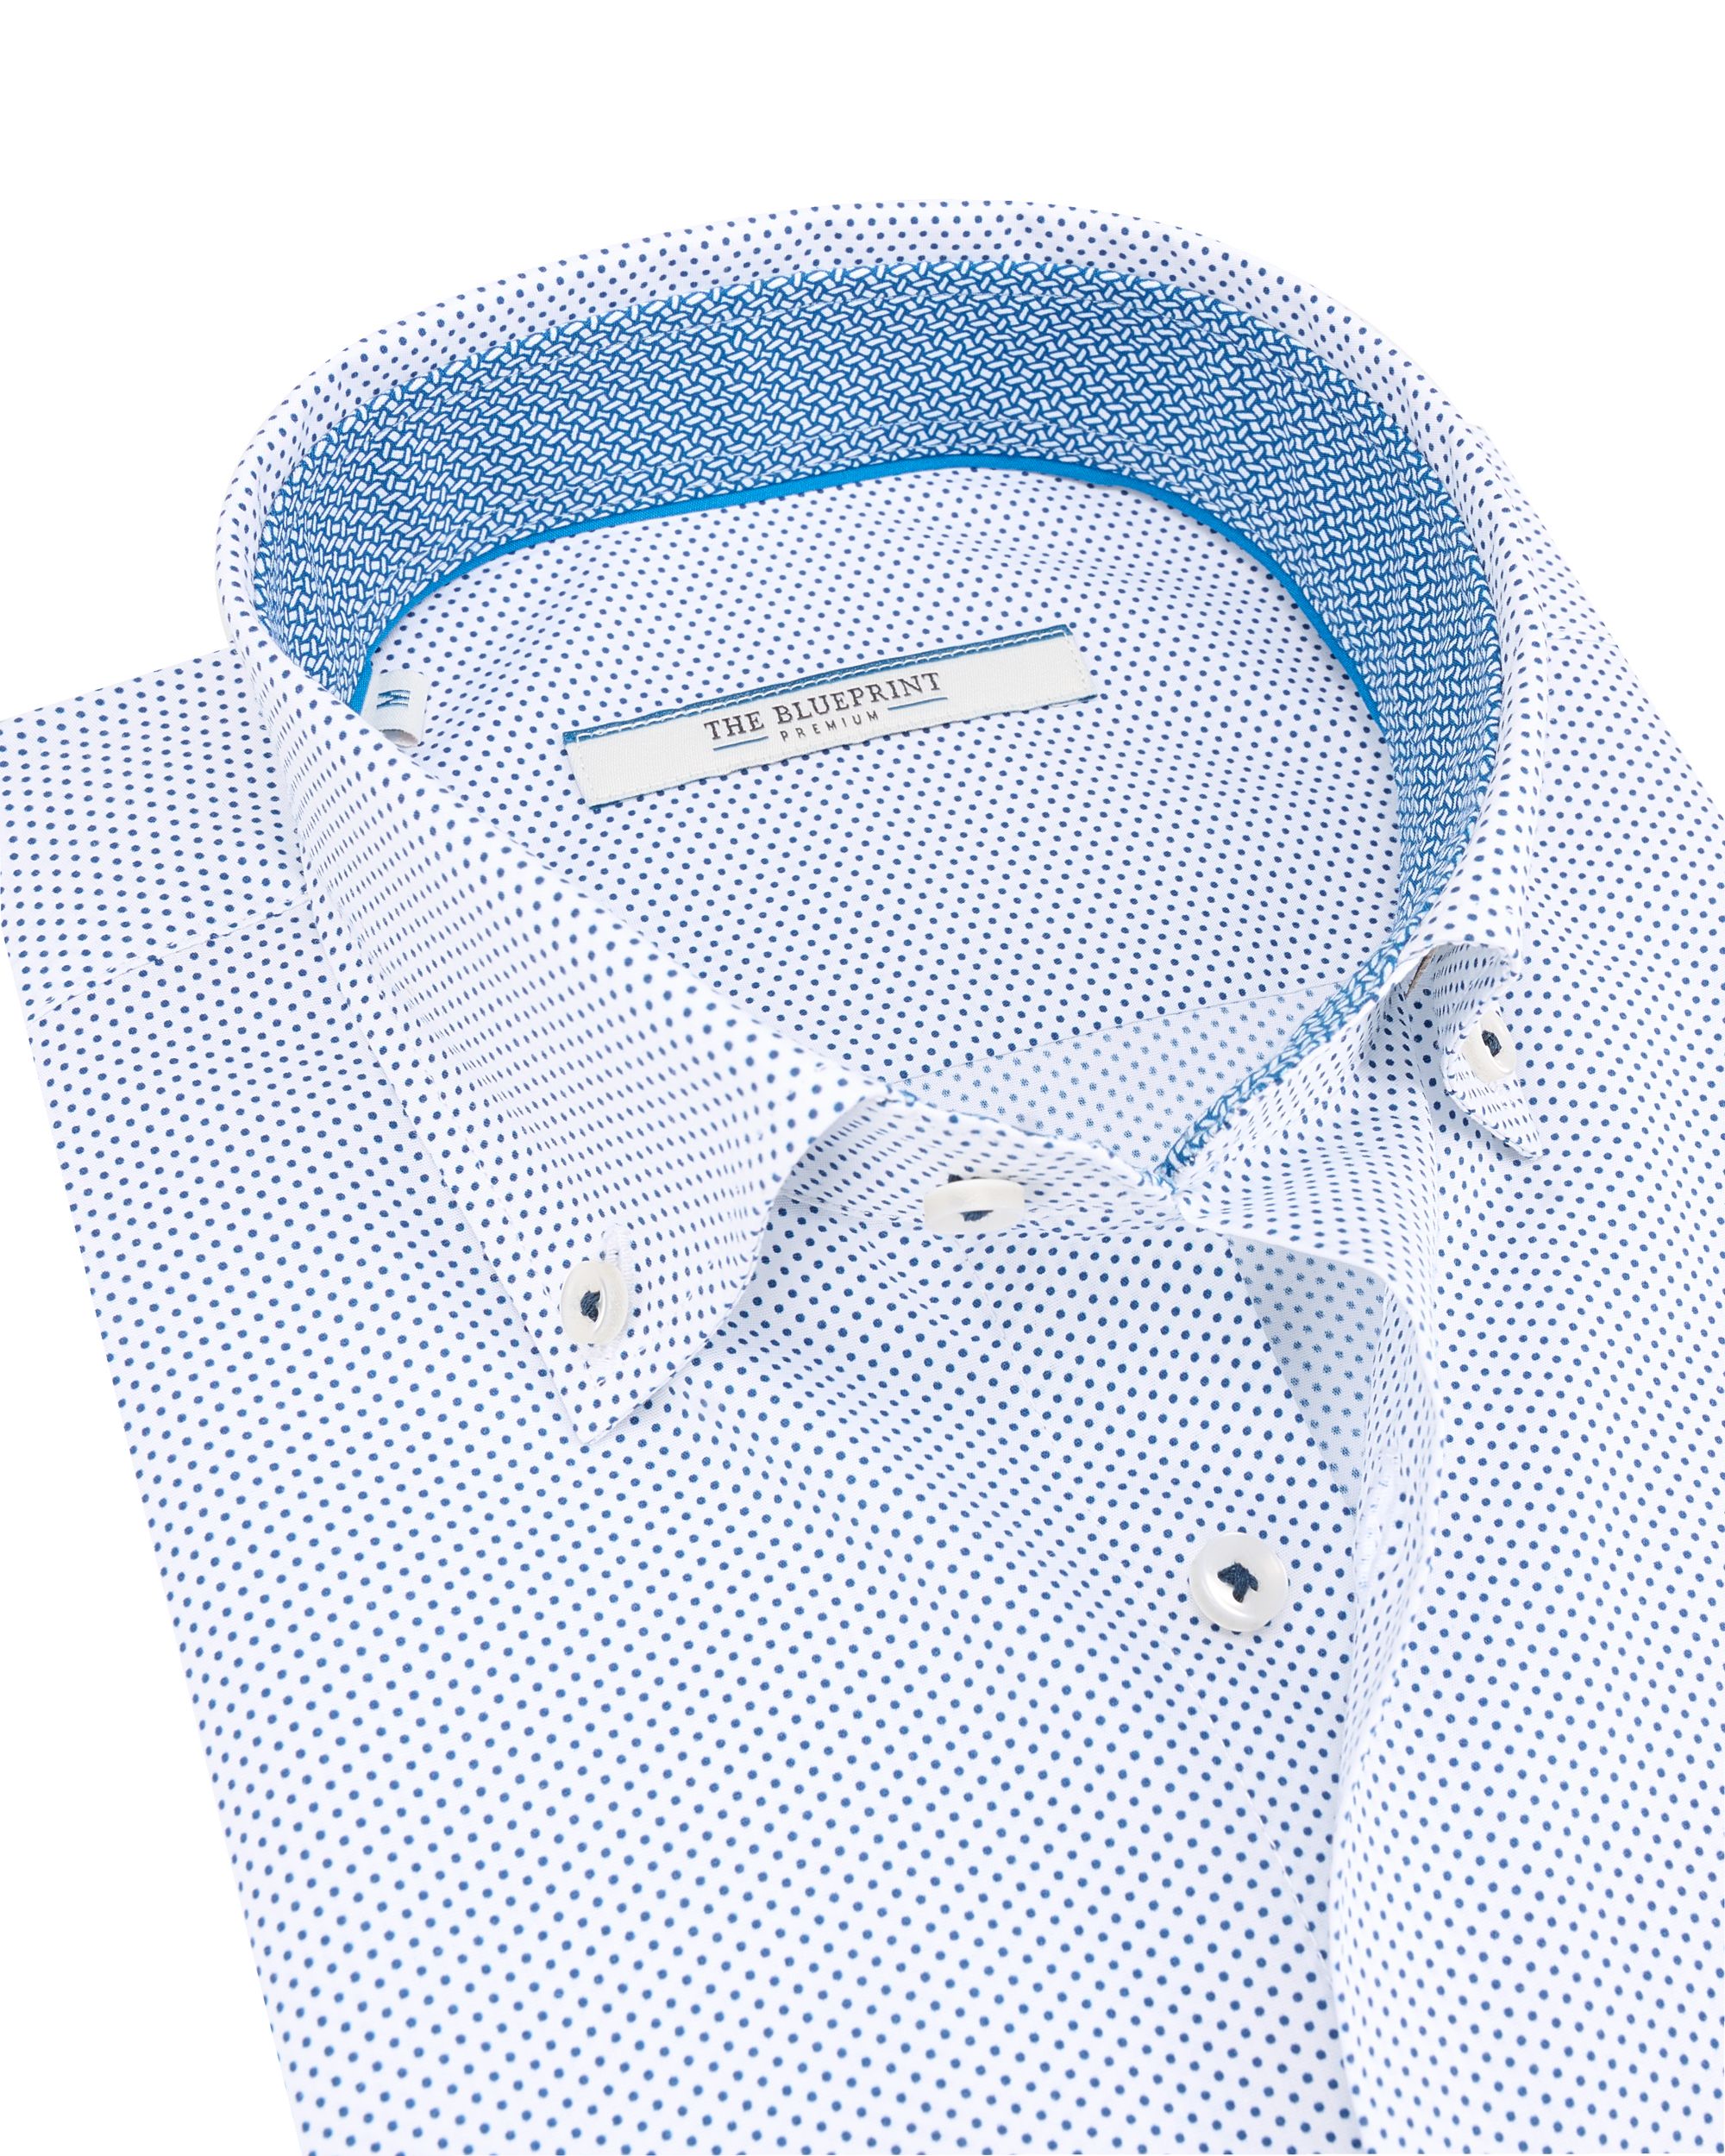 The BLUEPRINT Premium - Trendy Overhemd LM Wit dessin 094222-001-L